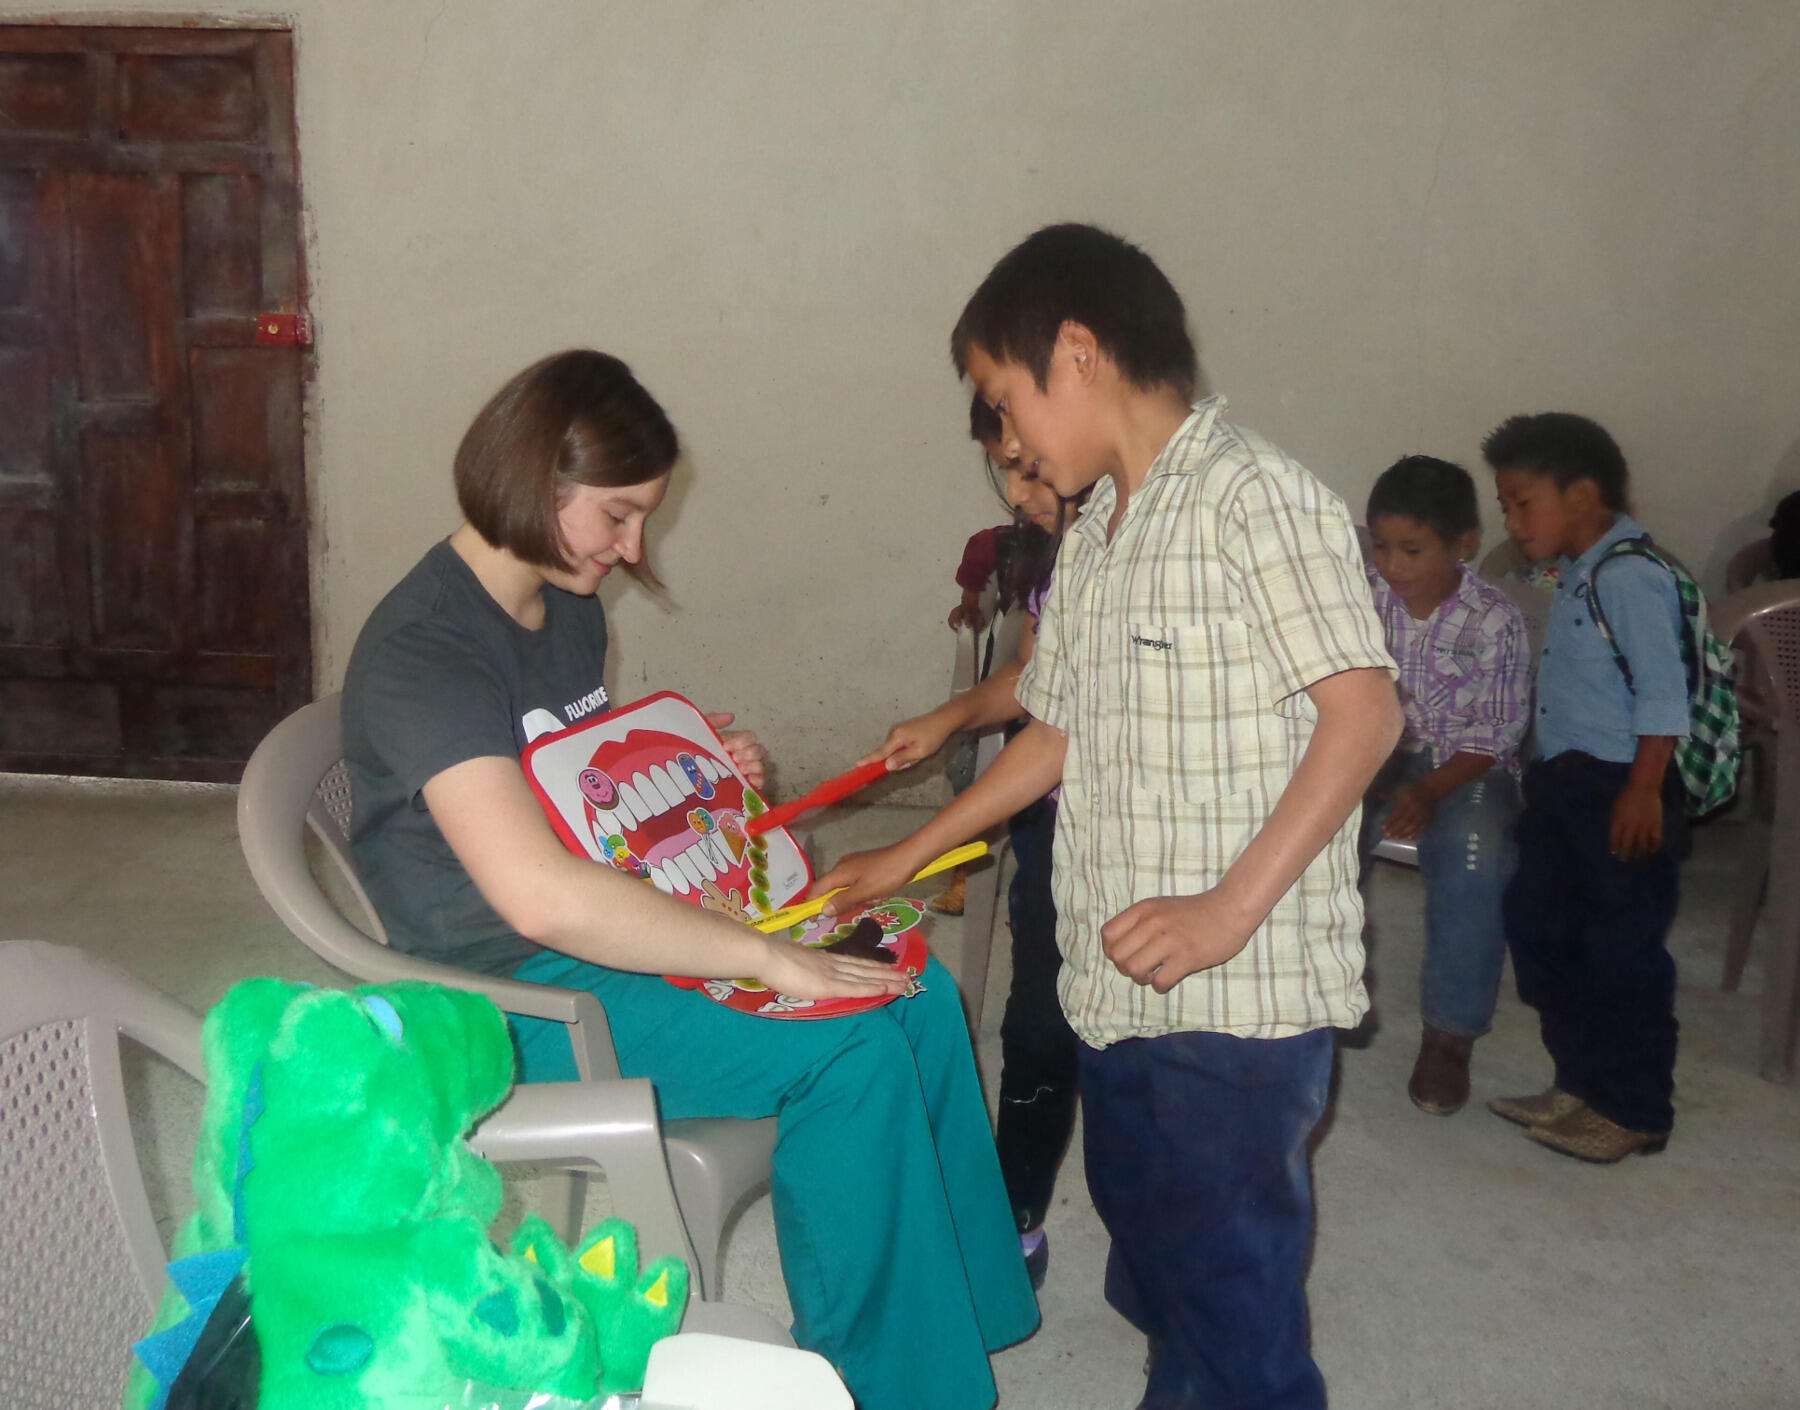 Lyubov Slashcheva visited villages surrounding Gracias, Honduras in December to provide dental hygiene education to the residents.